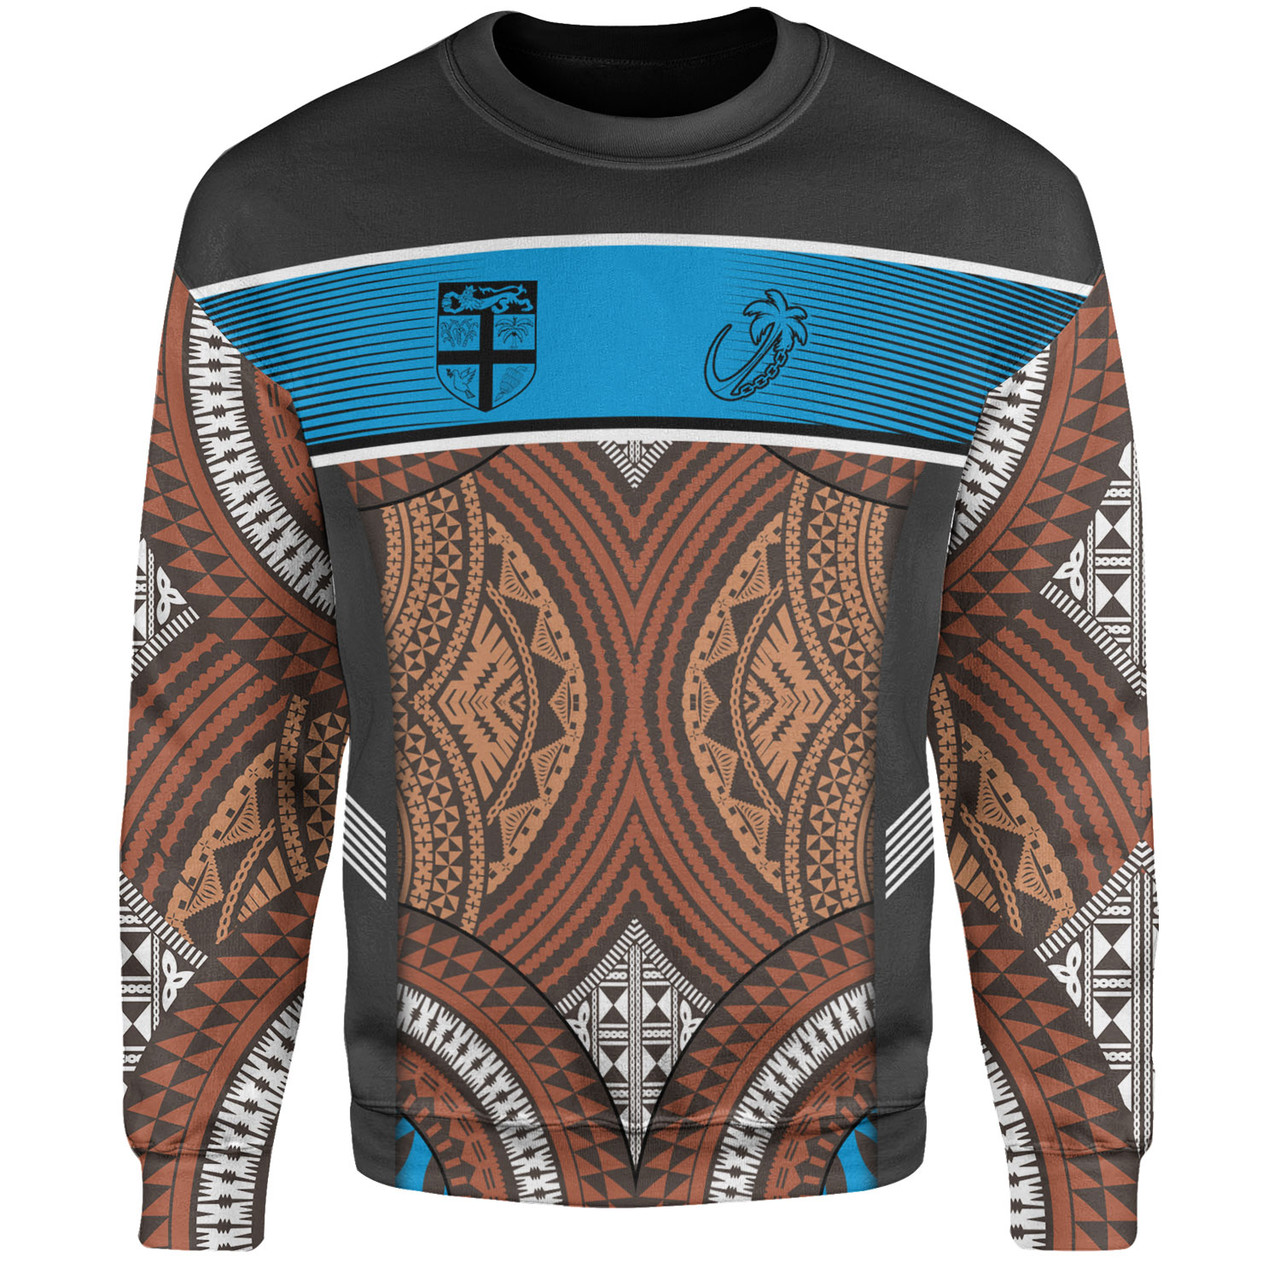 Fiji Sweatshirt Custom Bula Fiji Rugby Tapa Design